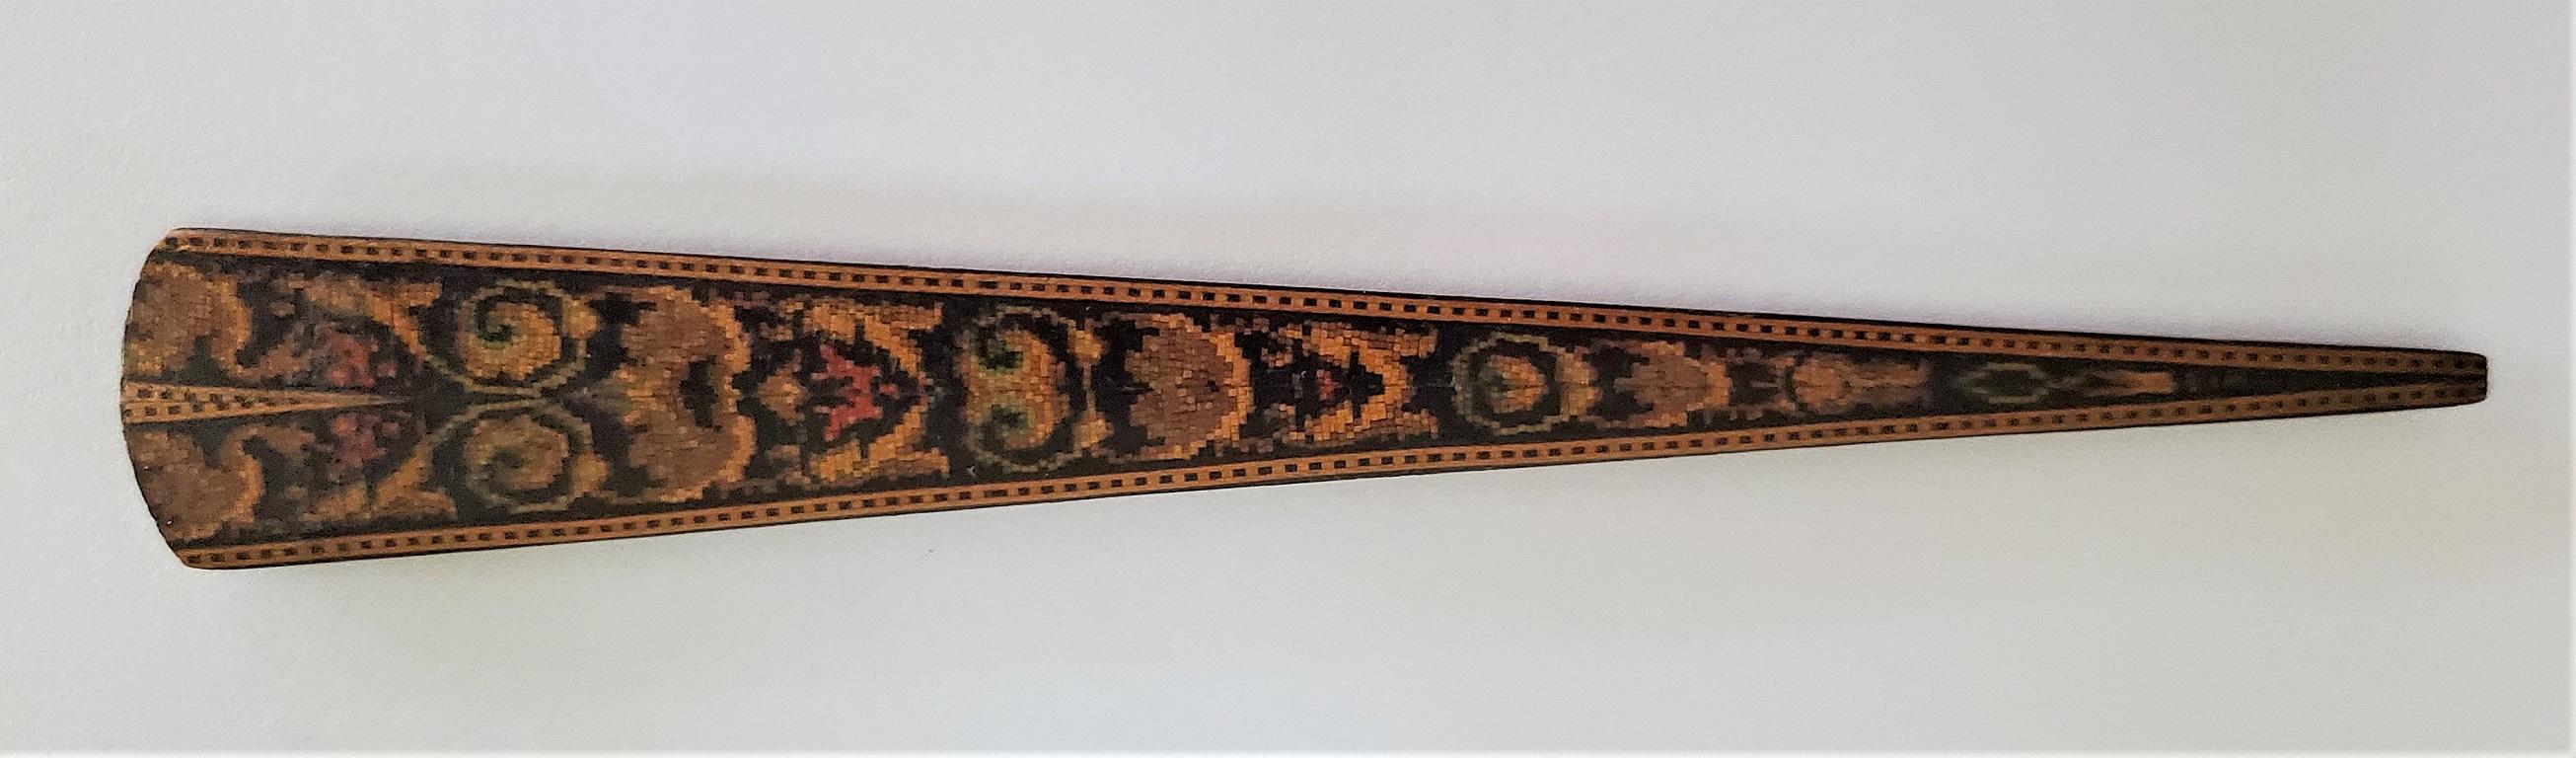 Rare 19th Century English Tunbridgeware Hair Pin or Slide For Sale 6